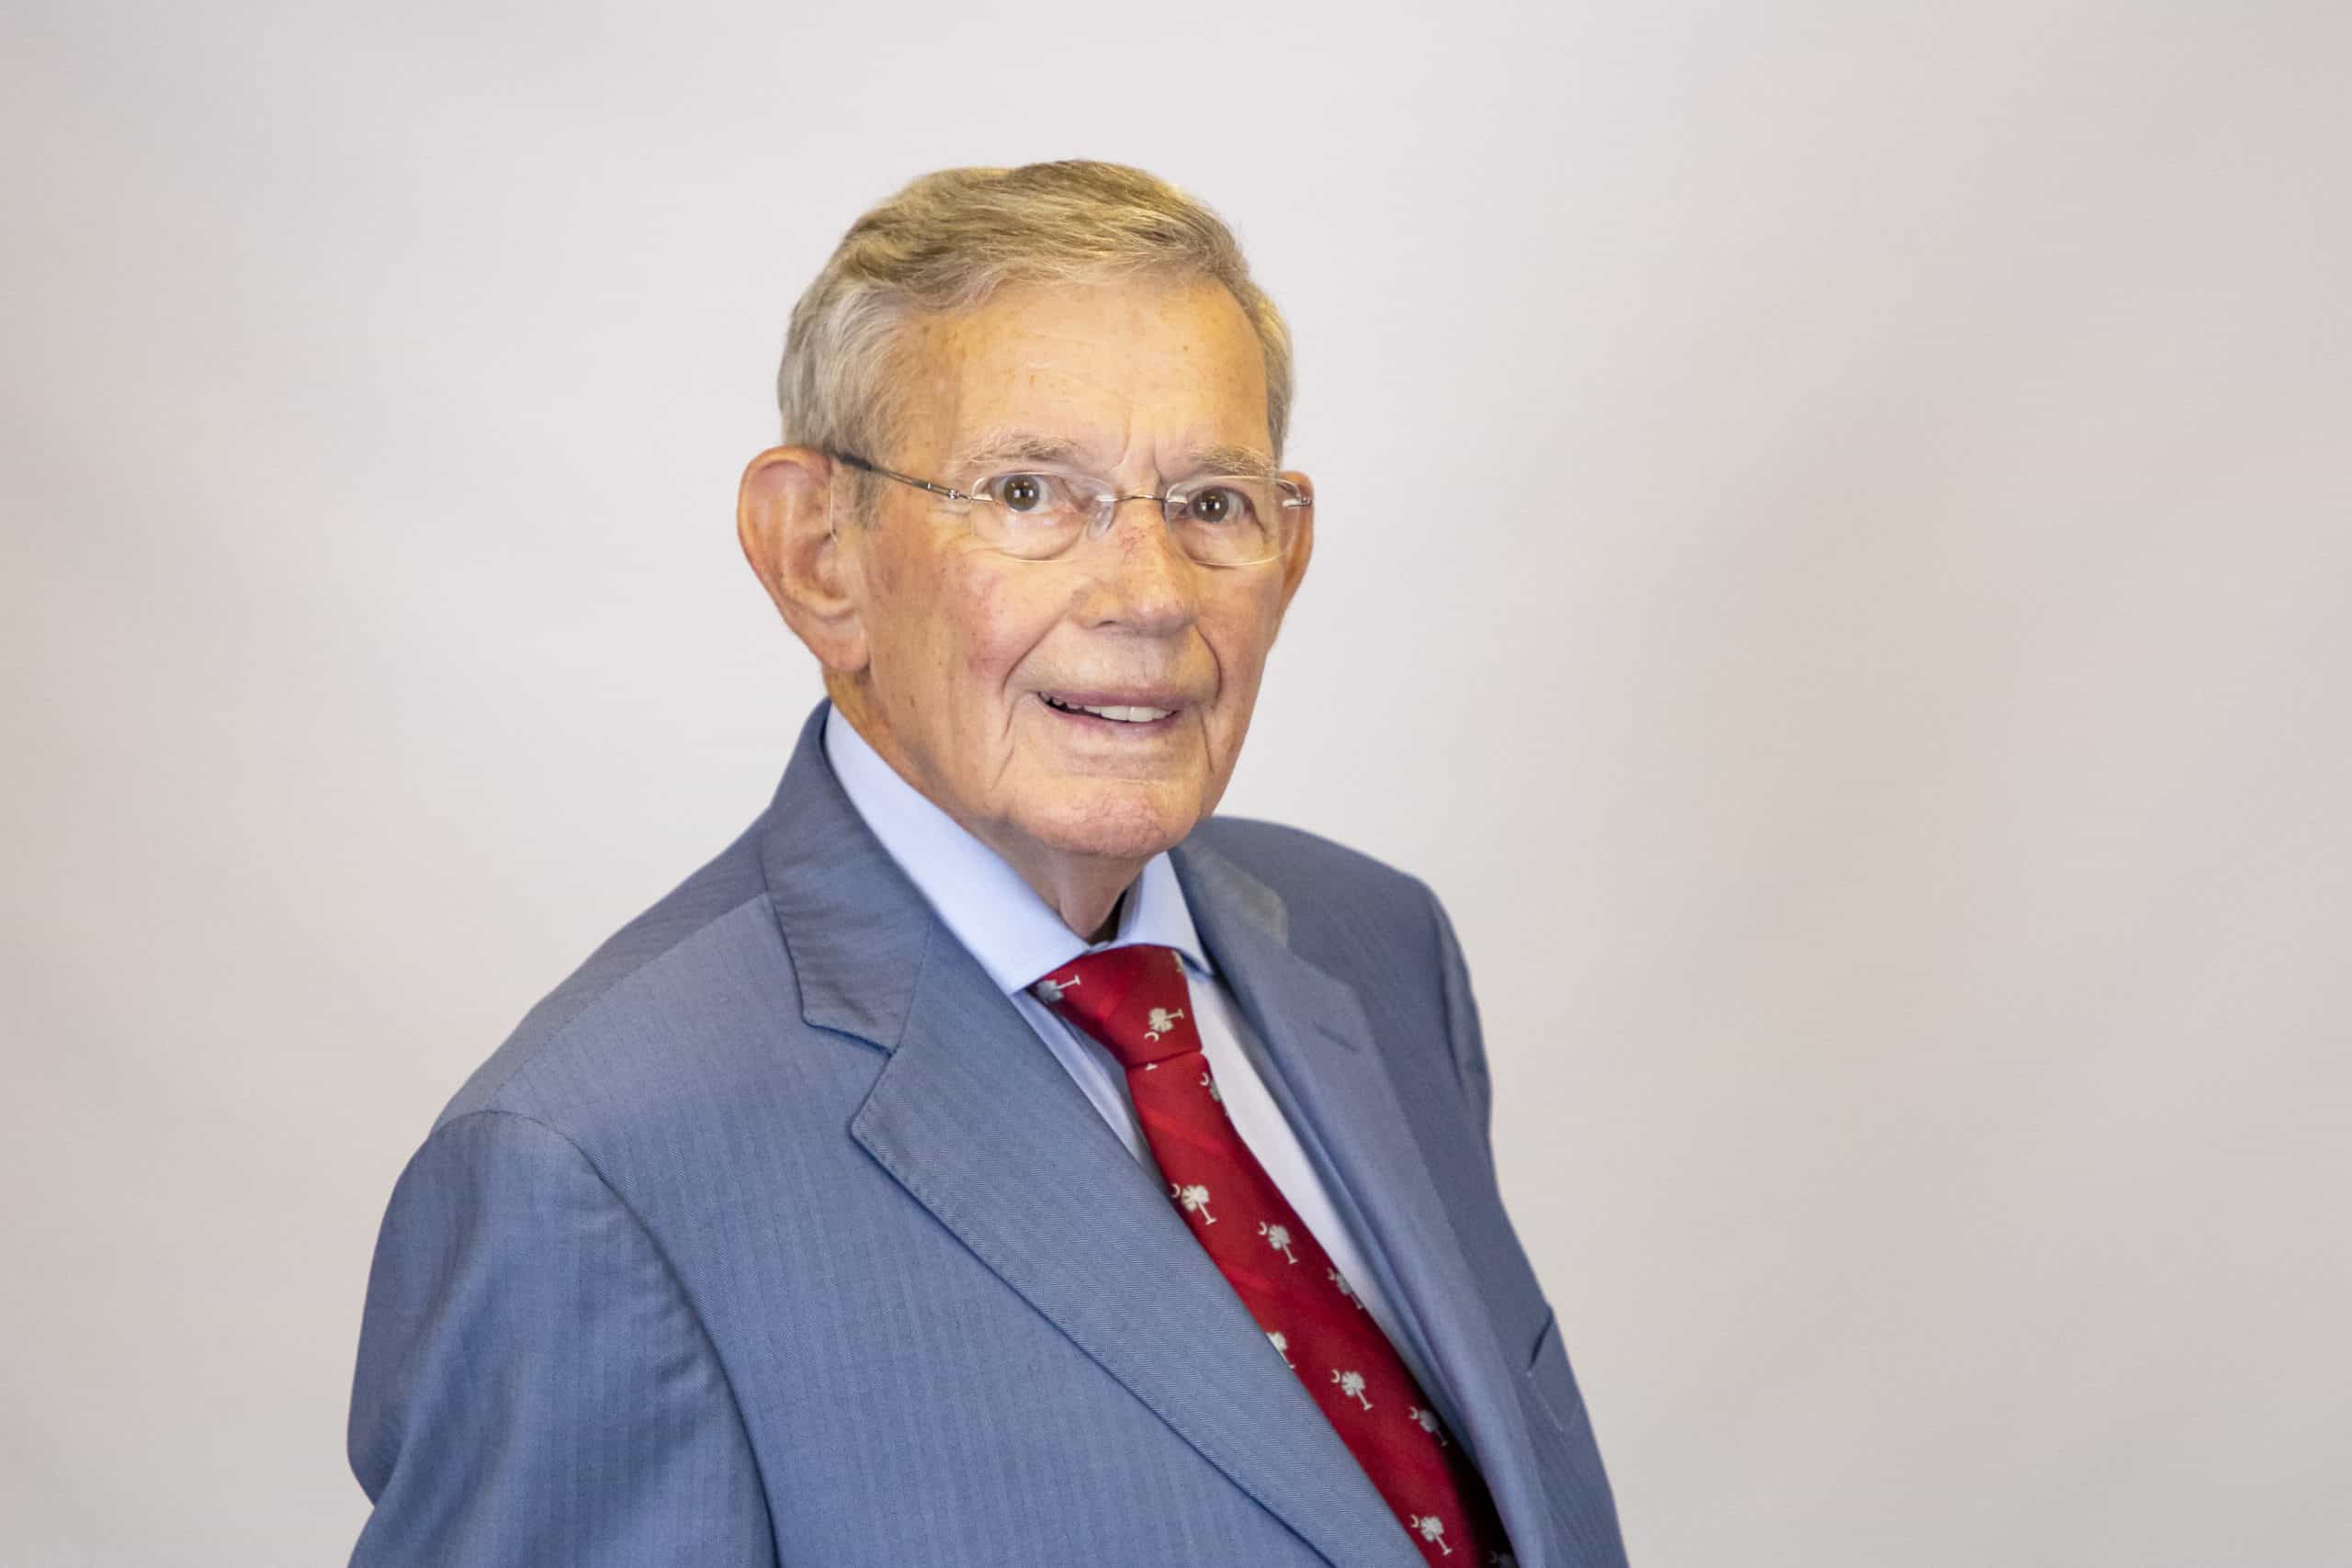 FMU mourns the passing of Sen. Hugh K. Leatherman Sr.